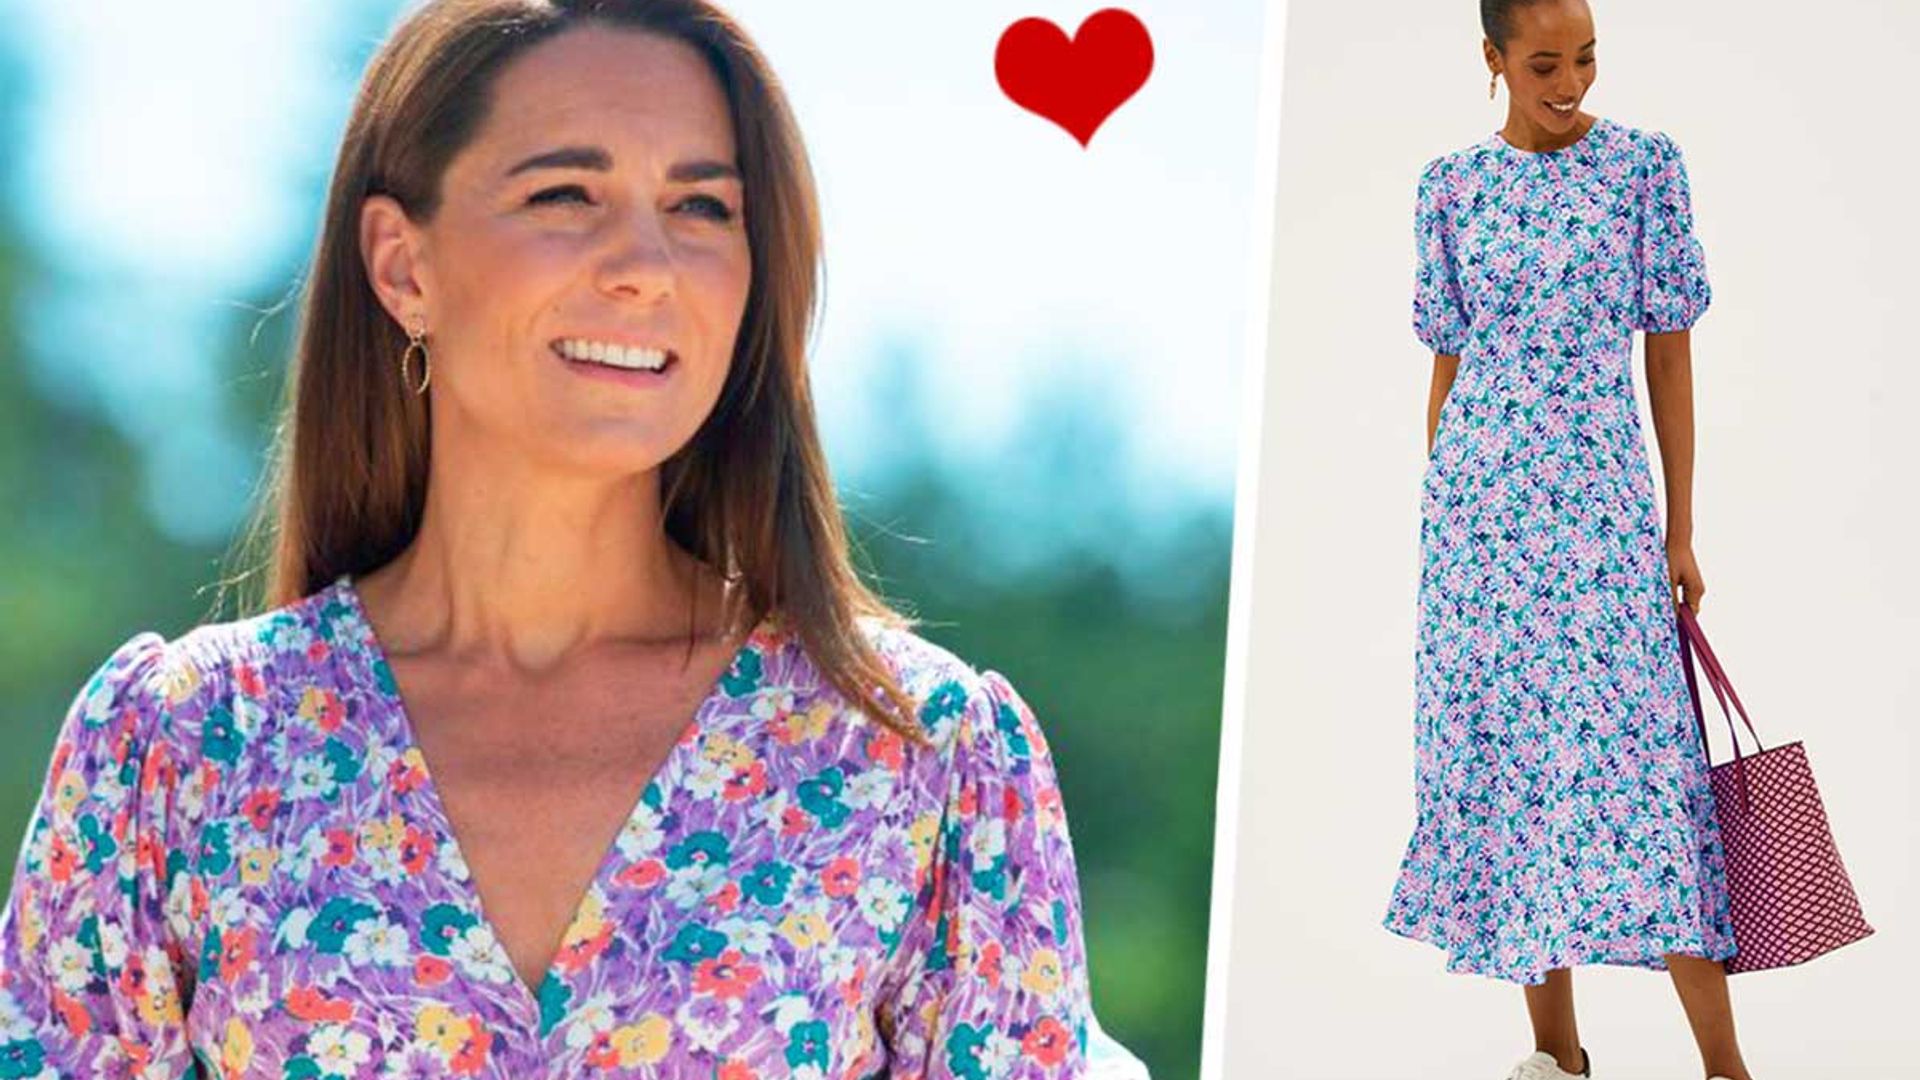 Marks & Spencer's new £39.50 dress is a dead ringer for Kate Middleton's pastel style